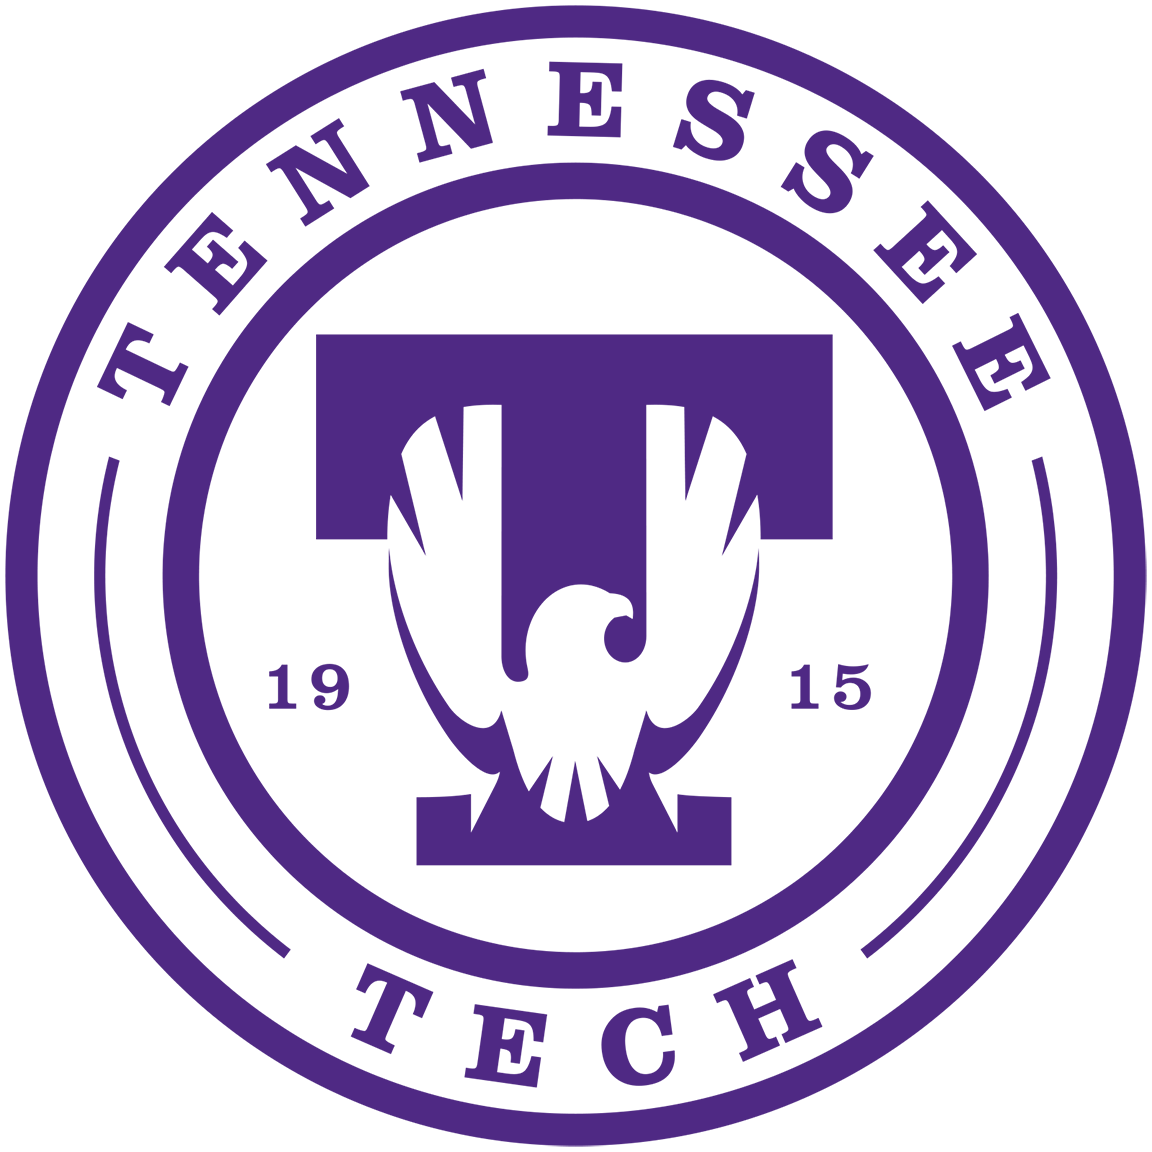 TN Tech Seal